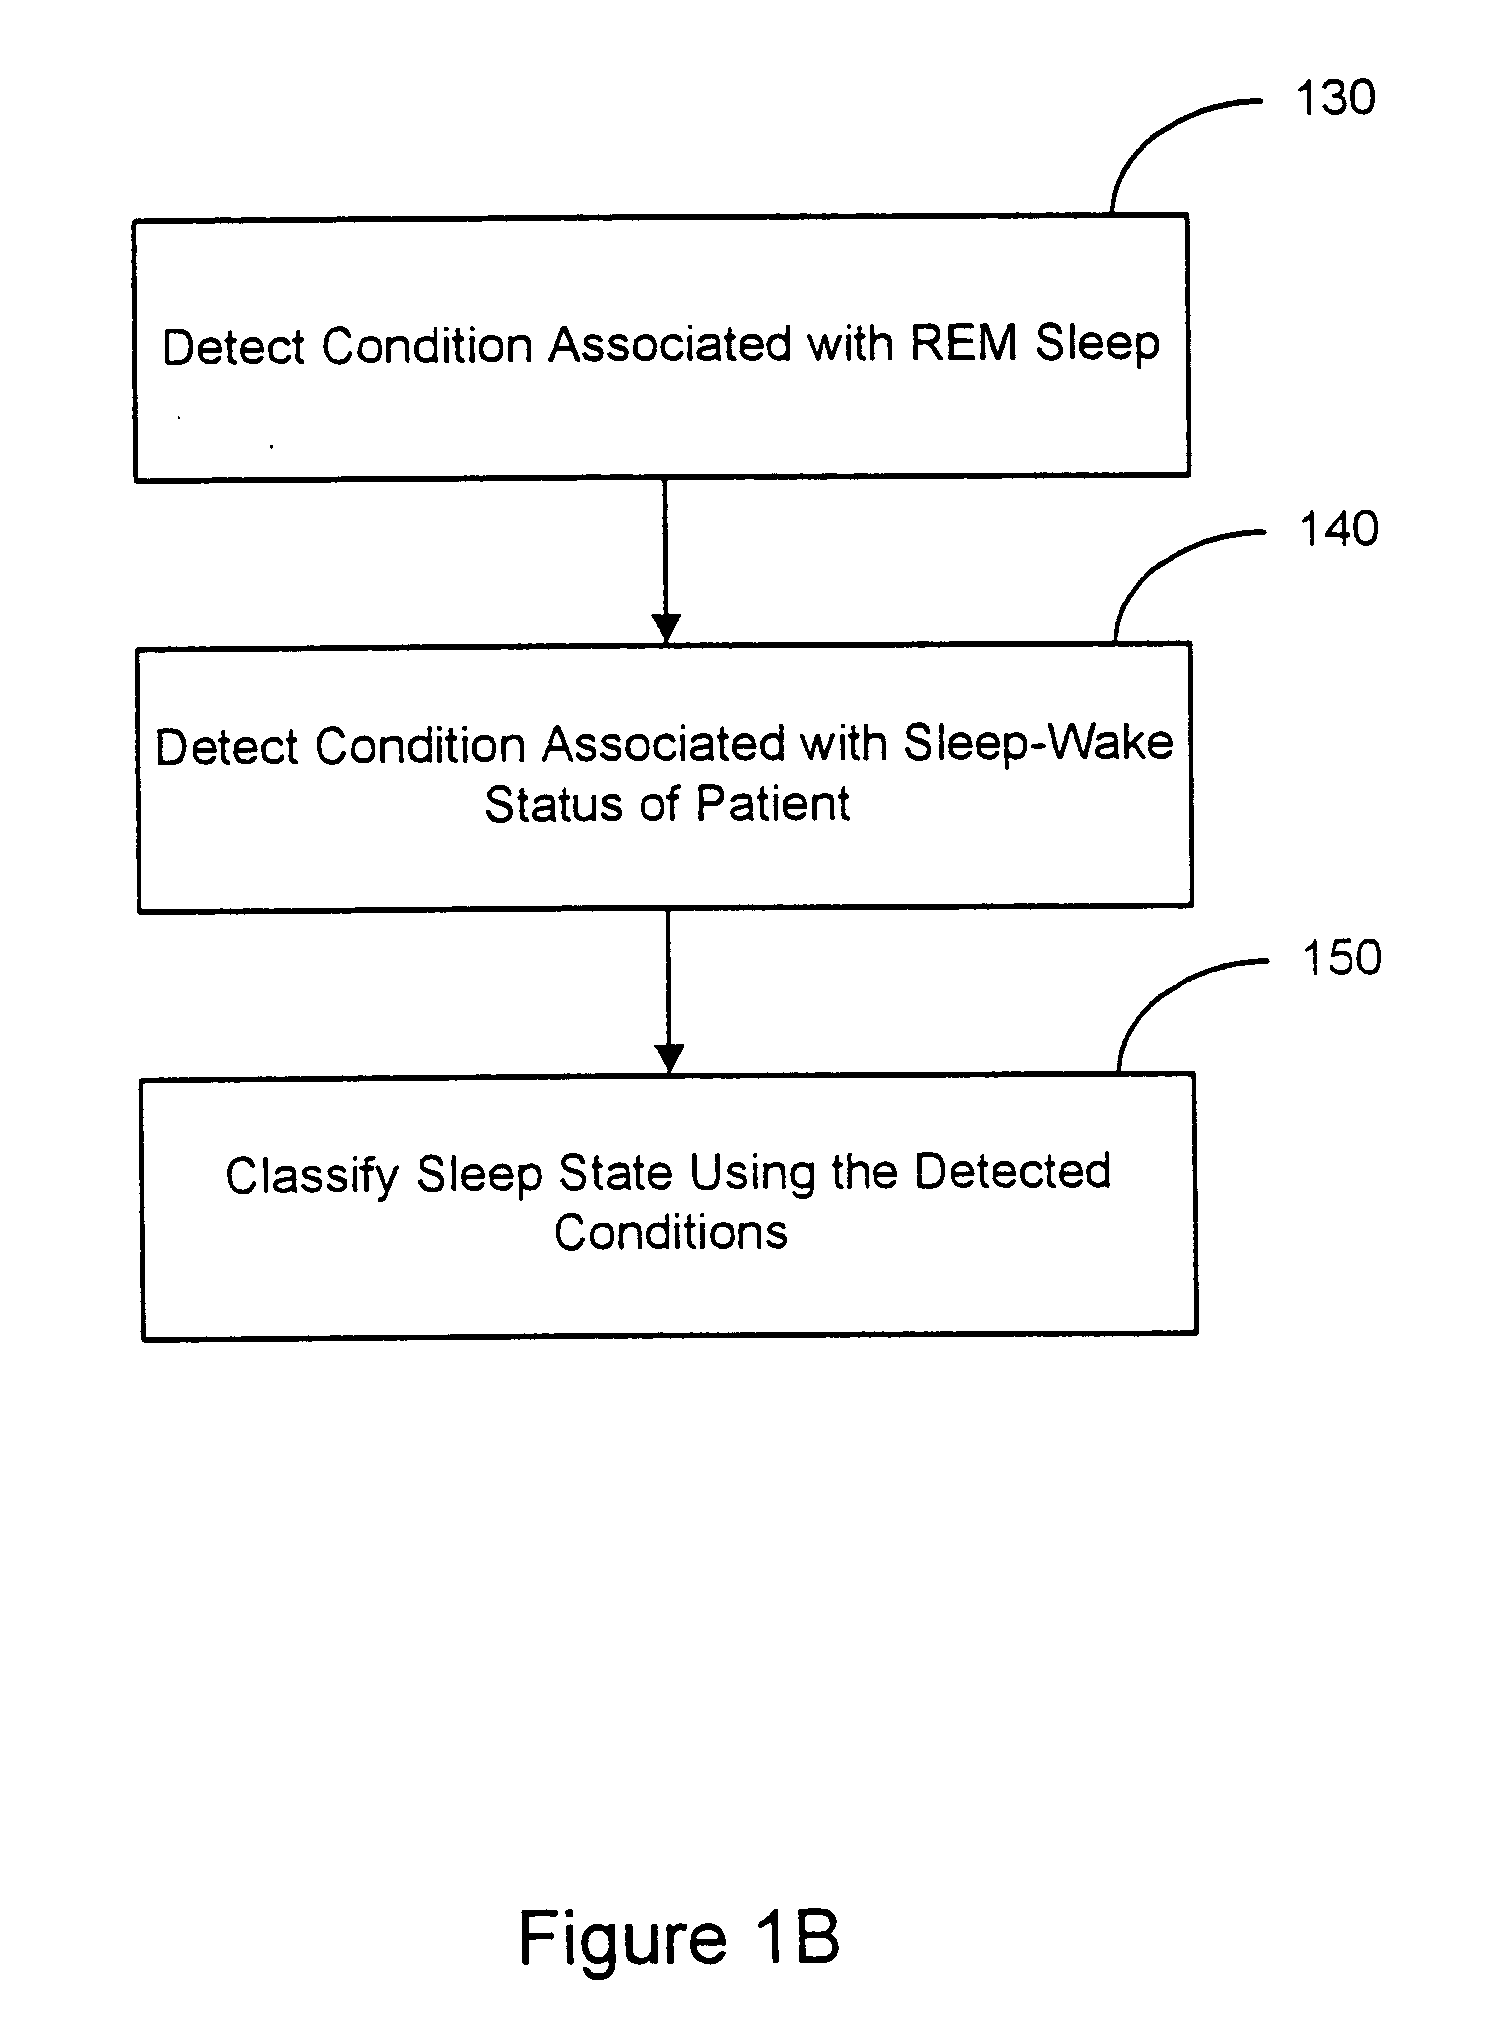 Sleep state classification